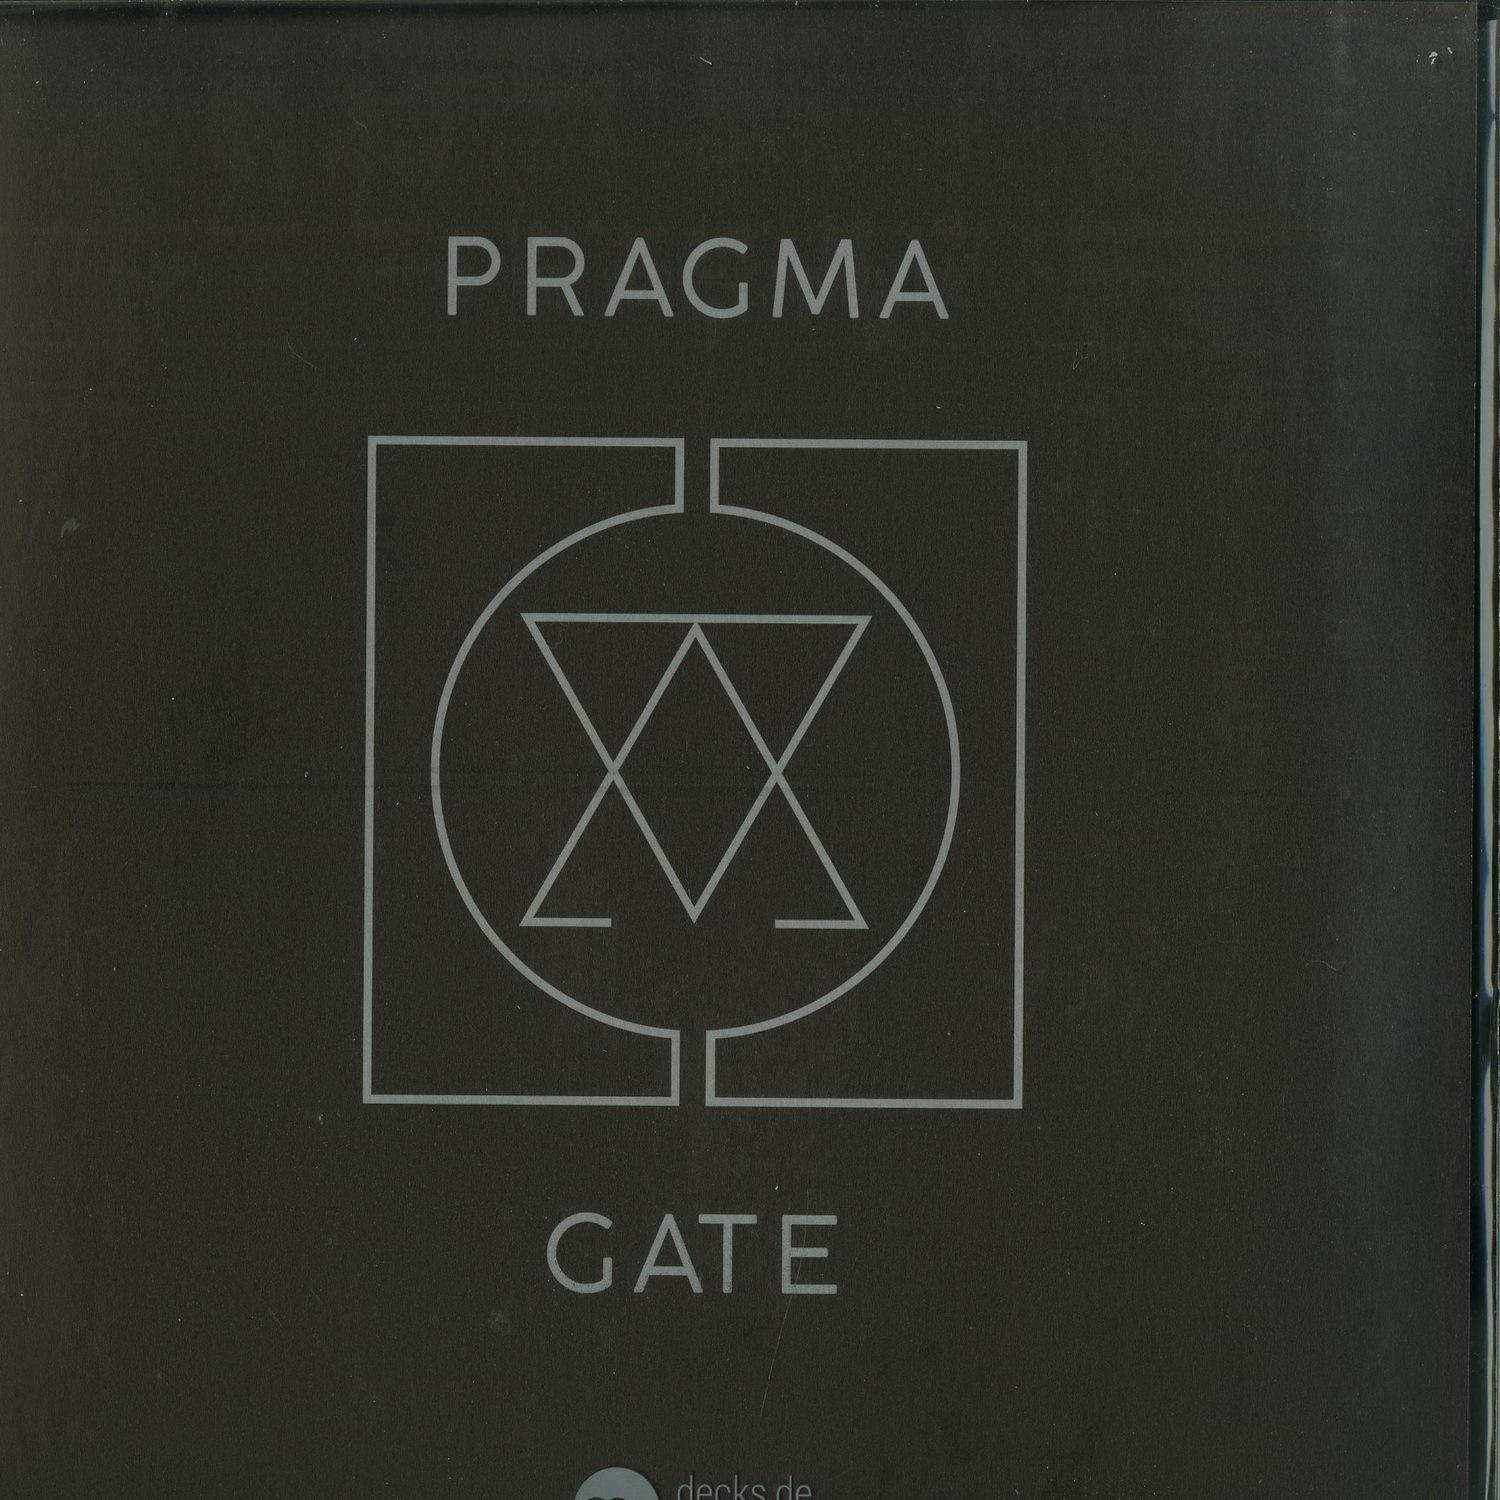 Pragma - GATE EP